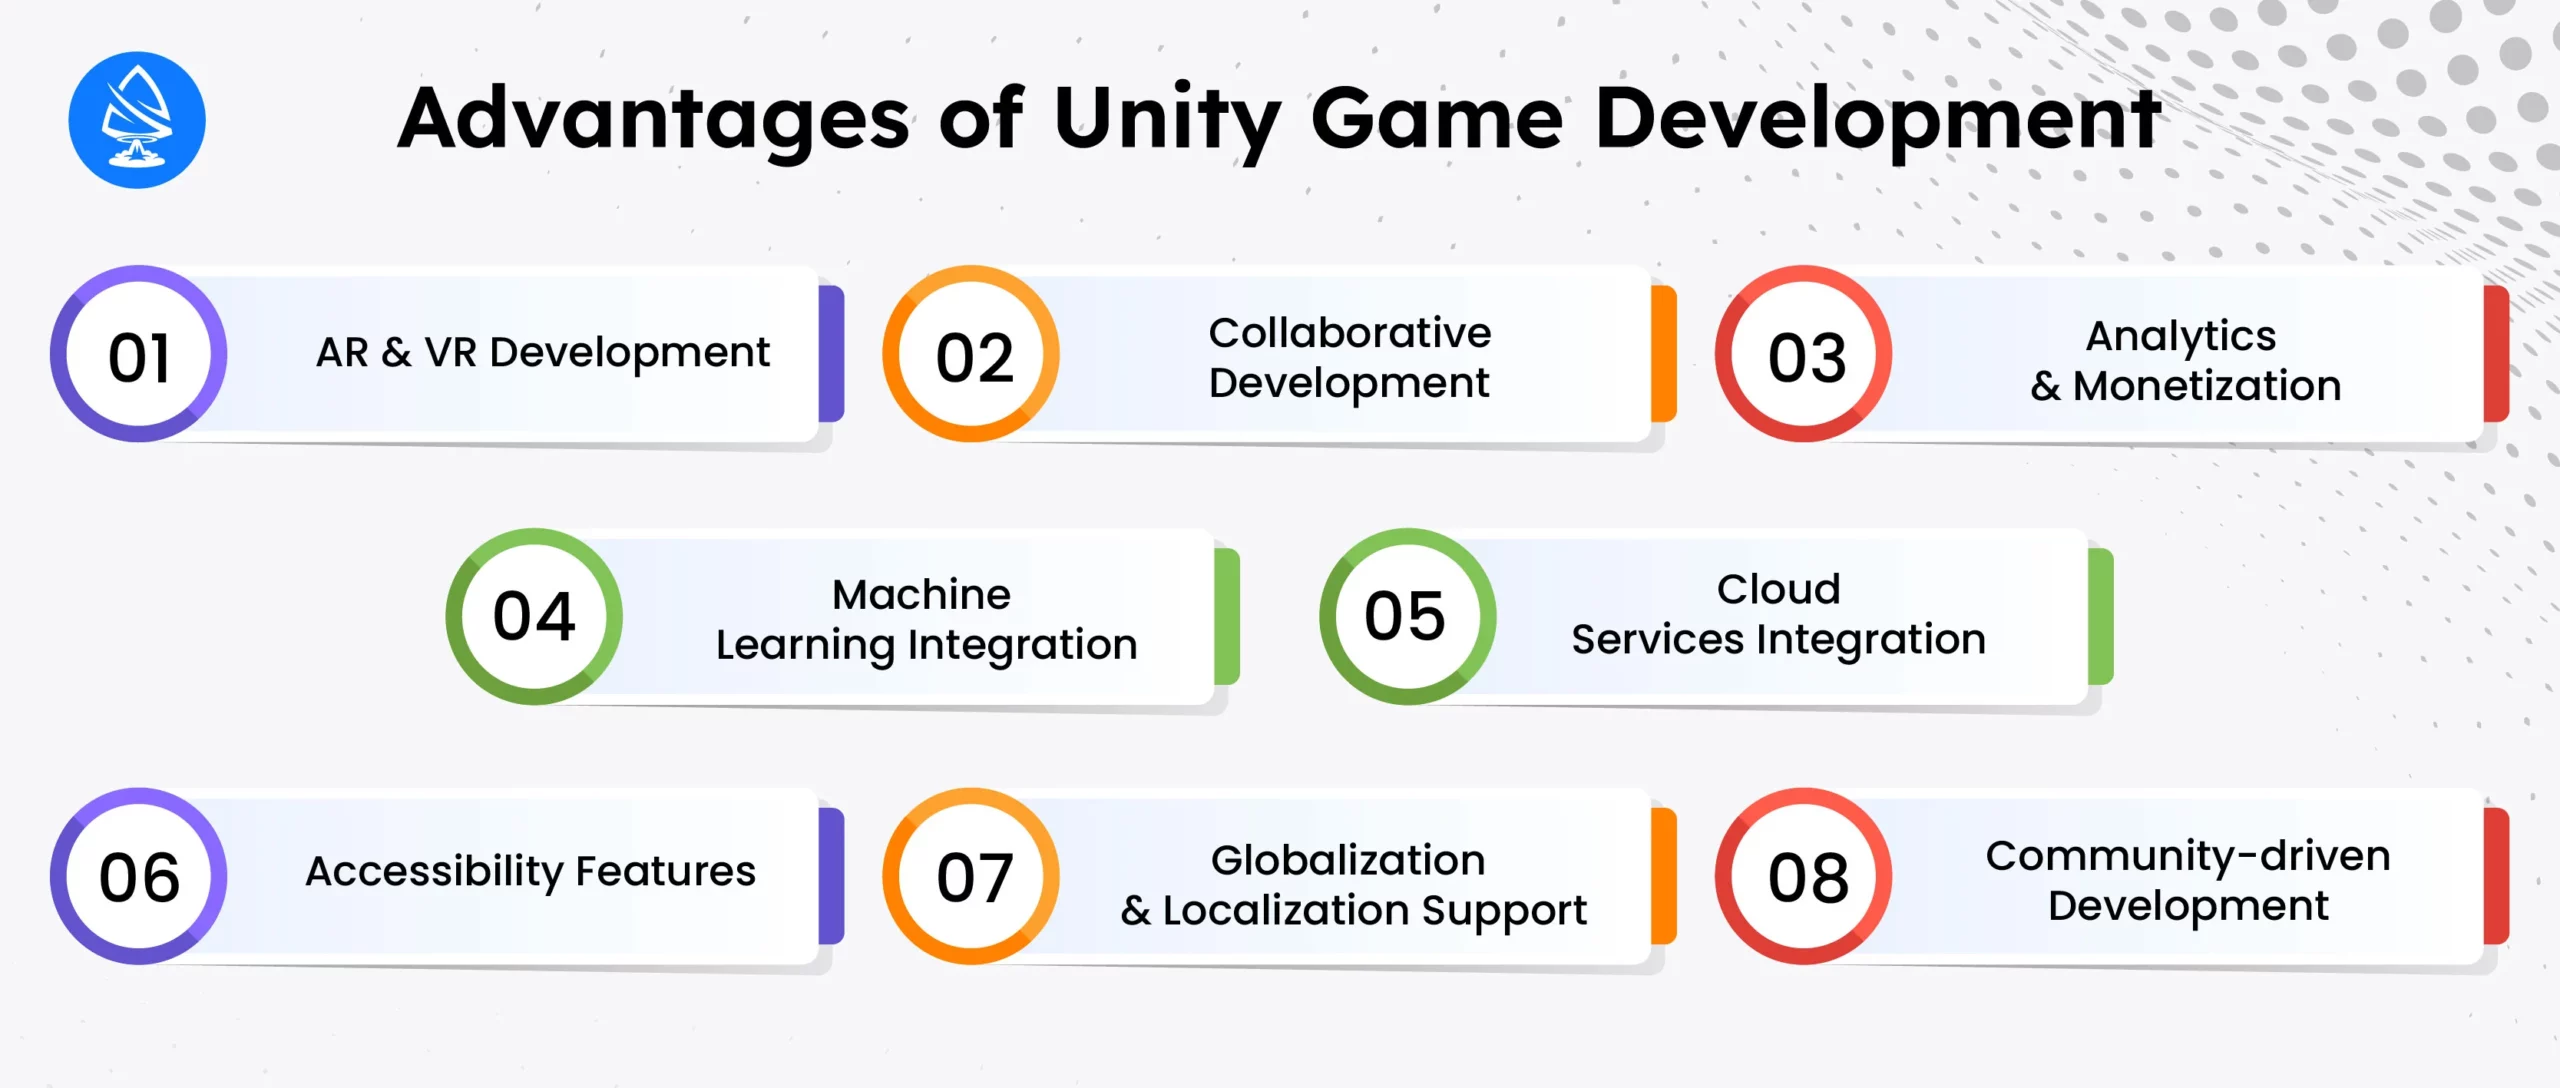 Advantages of Unity Game Development 